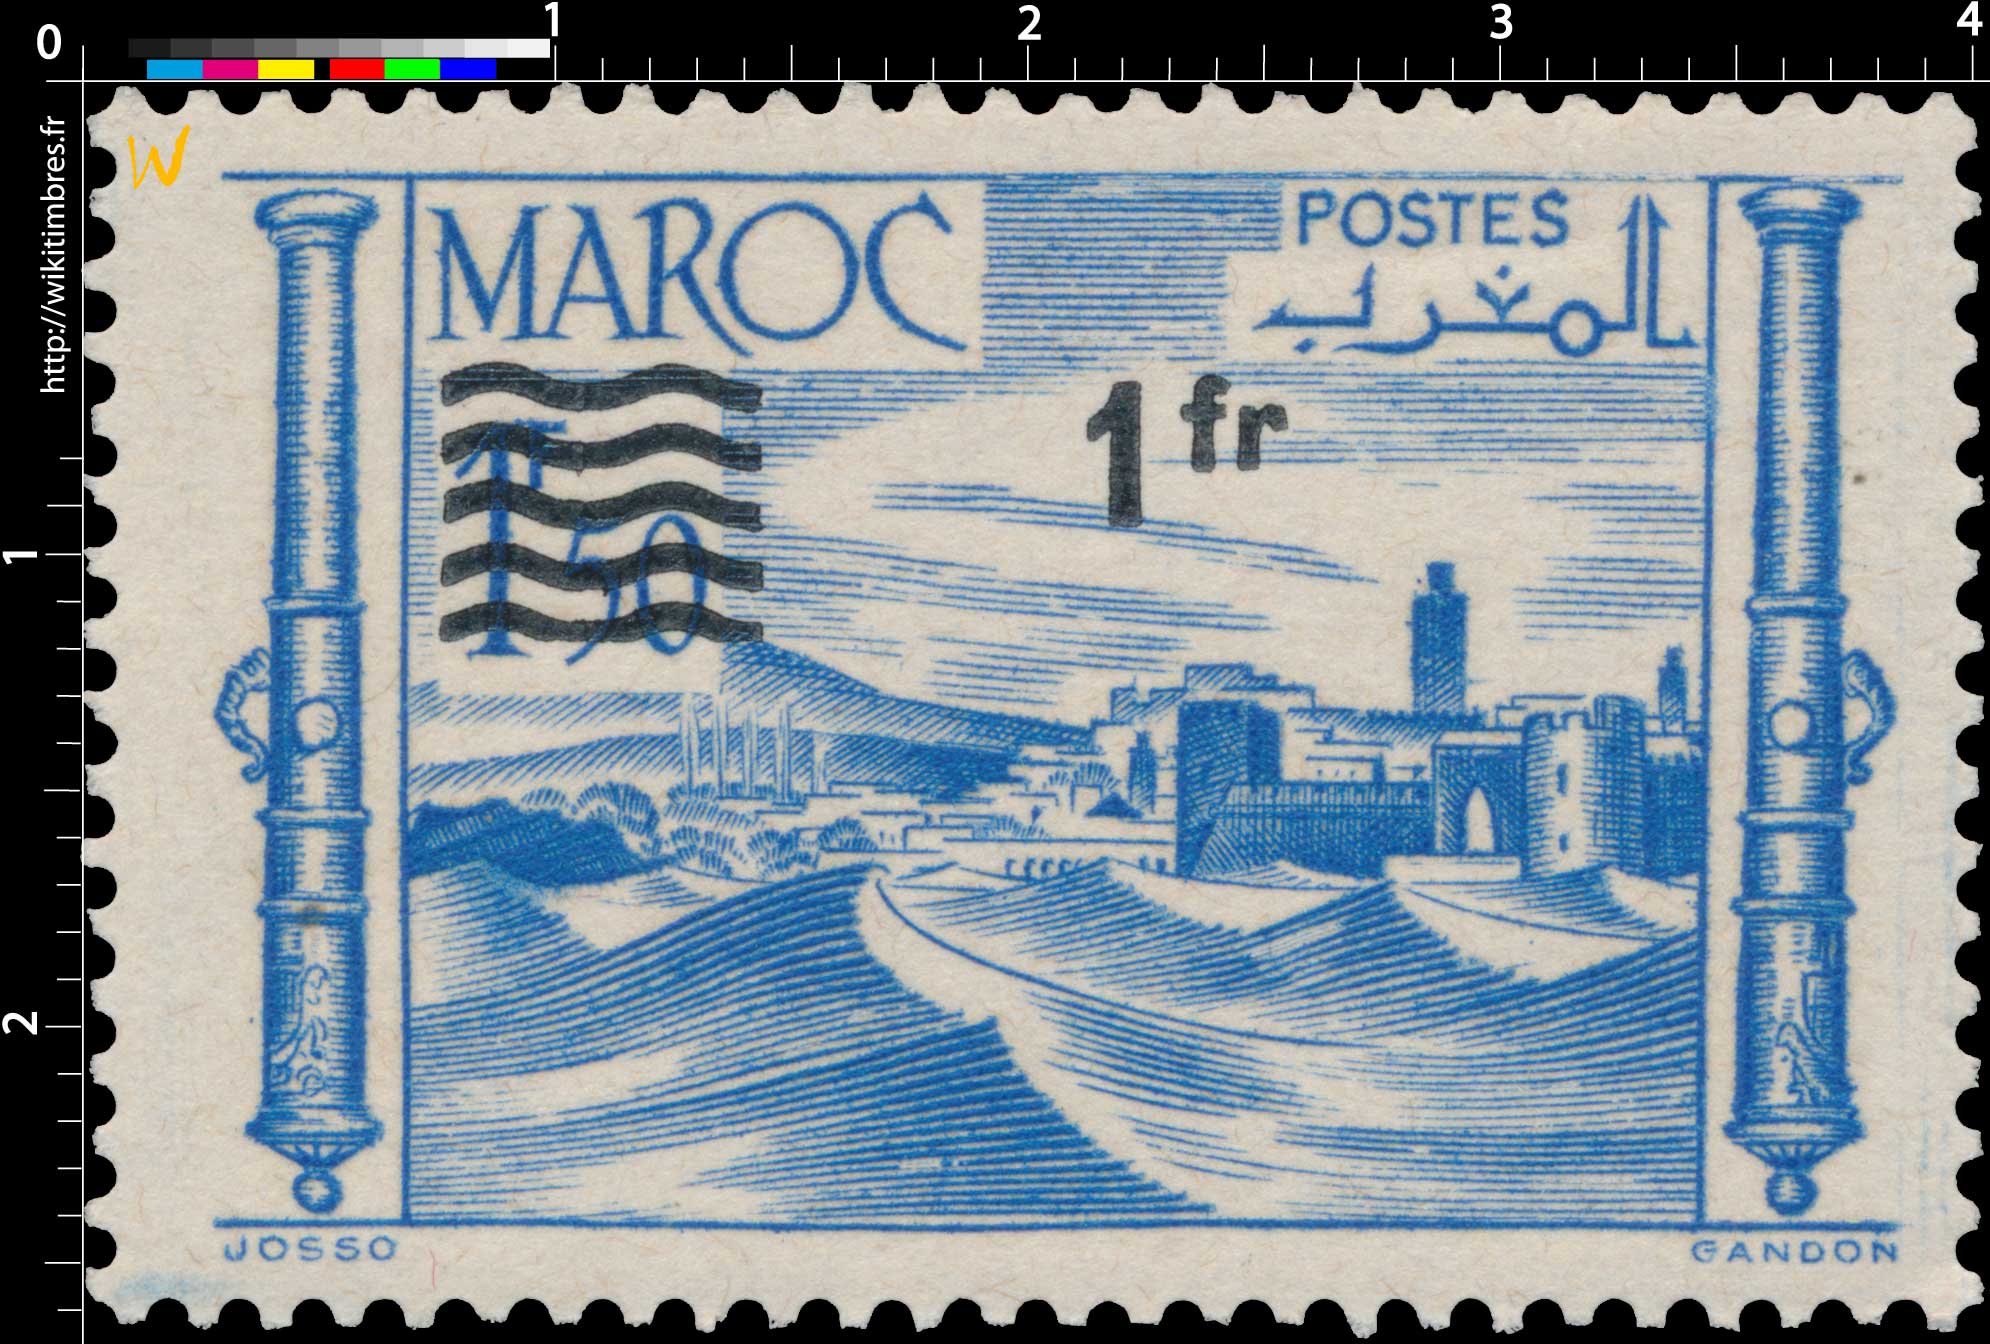 1954 Maroc - Forteresse